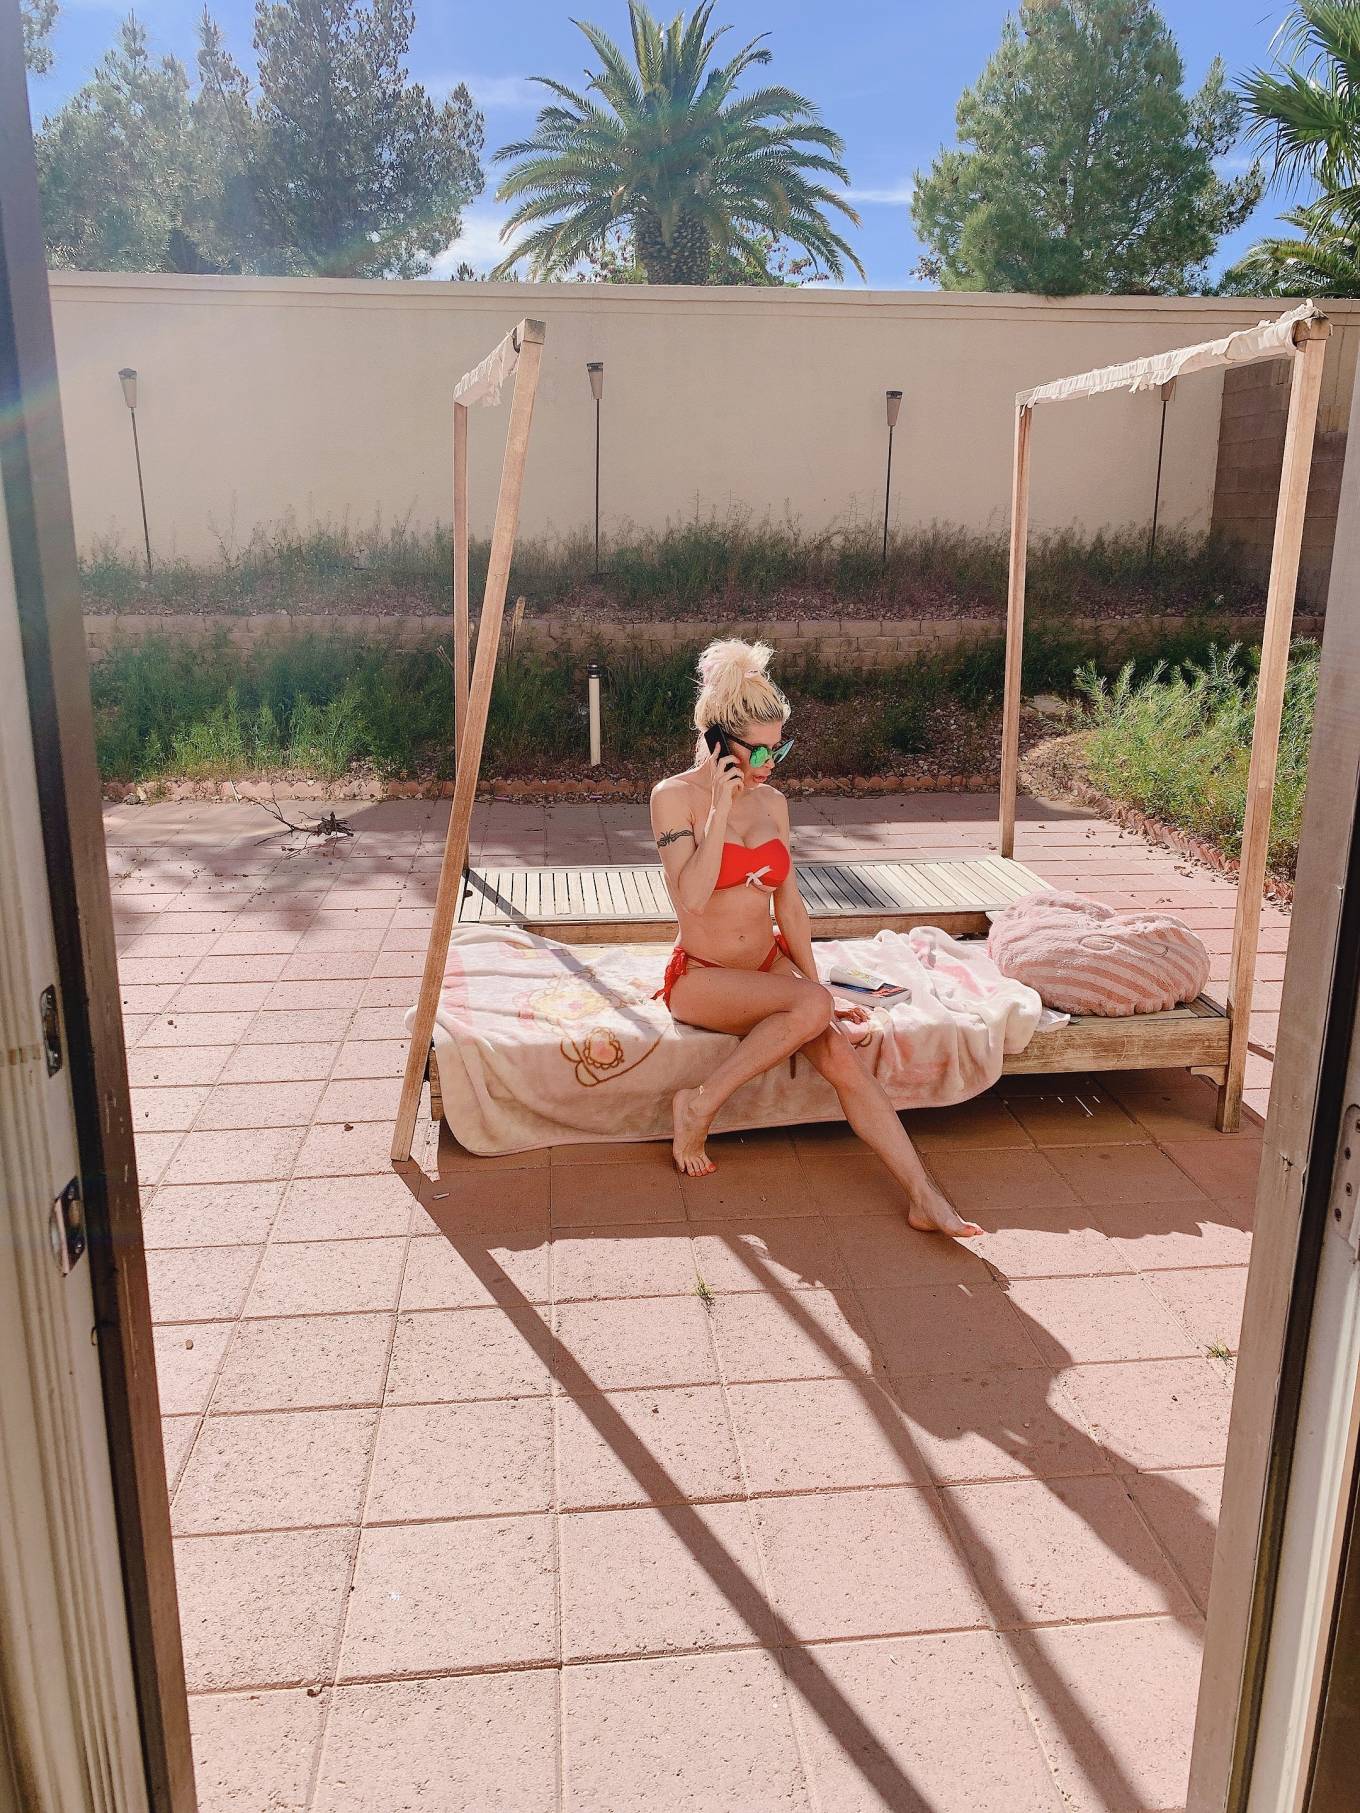 Frenchy Morgan â€“ Tanning in her garden in Las Vegas